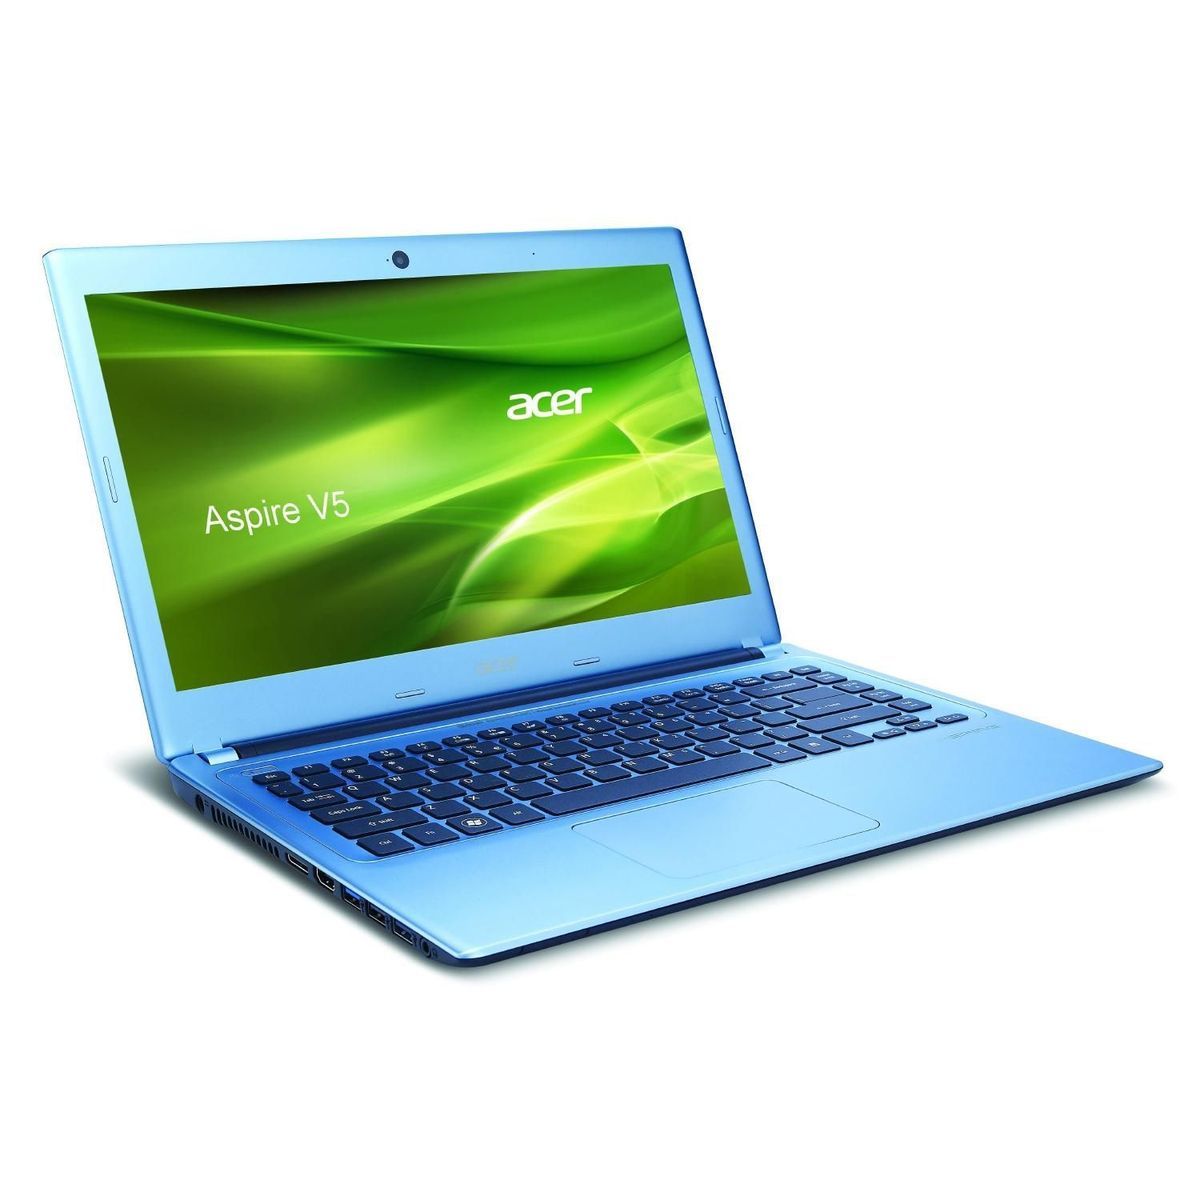 Acer Aspire V5 431 887B4G50Mabb NX.M17EG.001 Notebook blau Windows 8